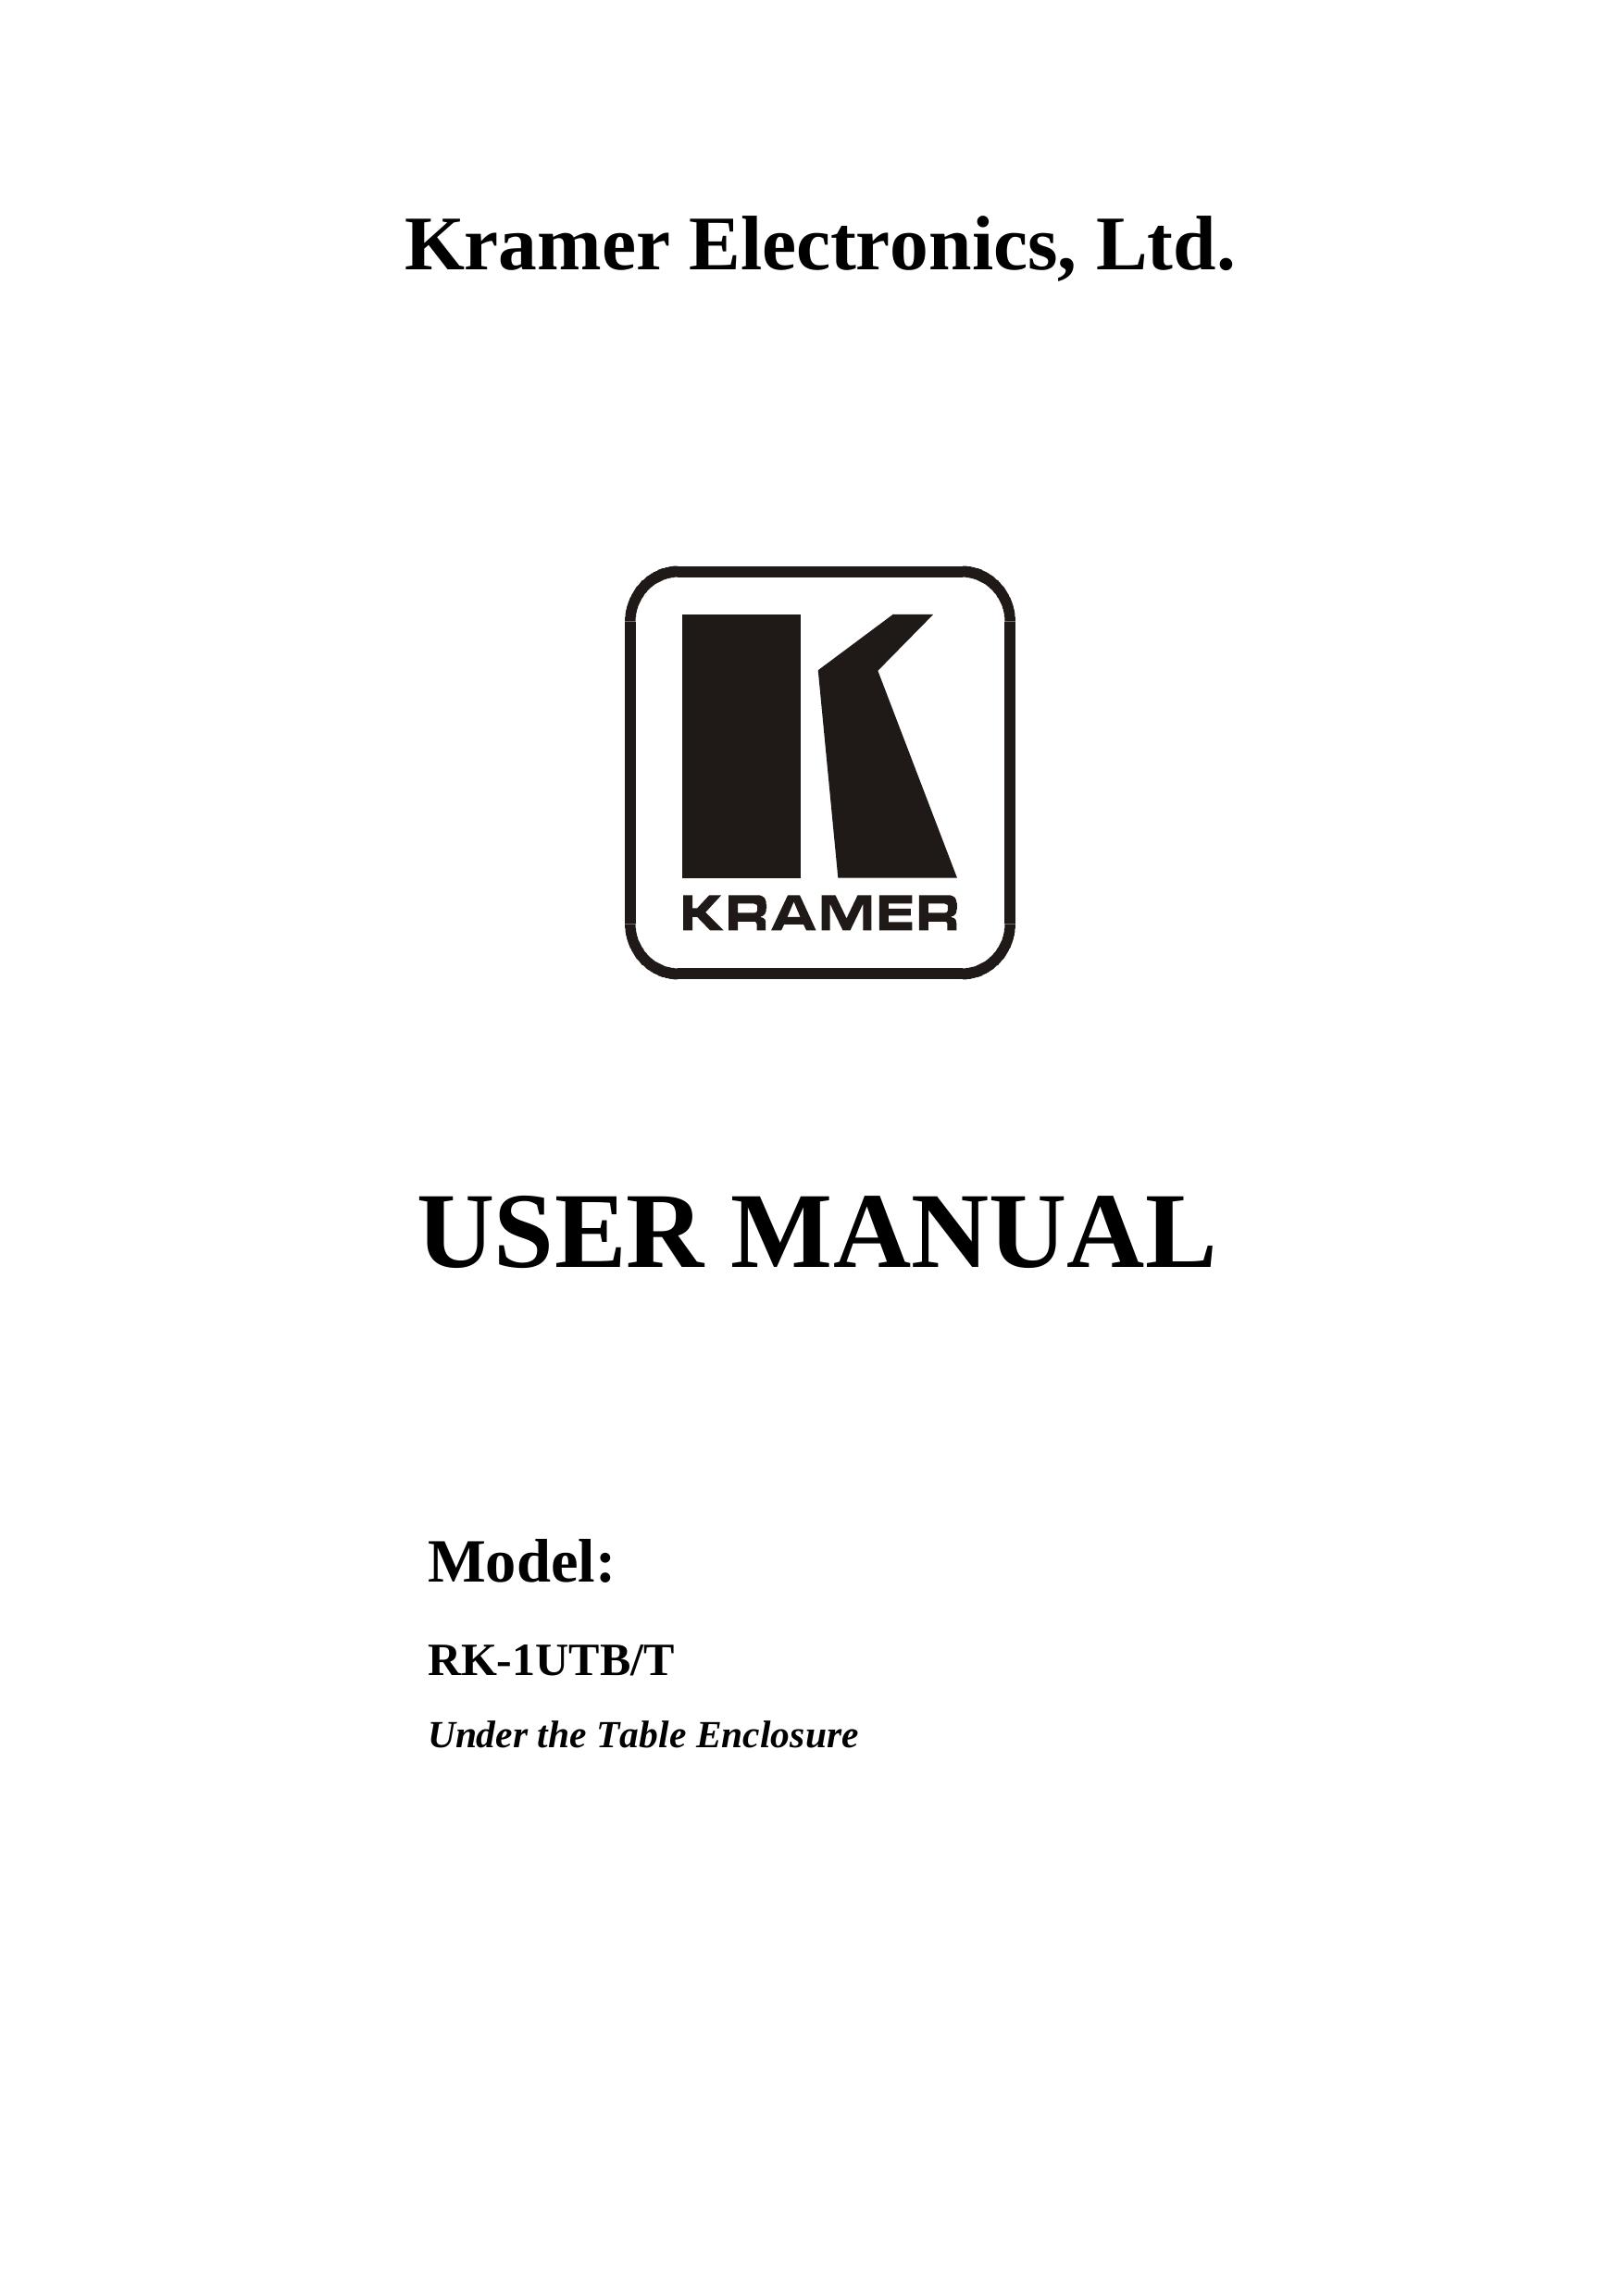 Kramer Electronics rk-1utb Ventilation Hood User Manual